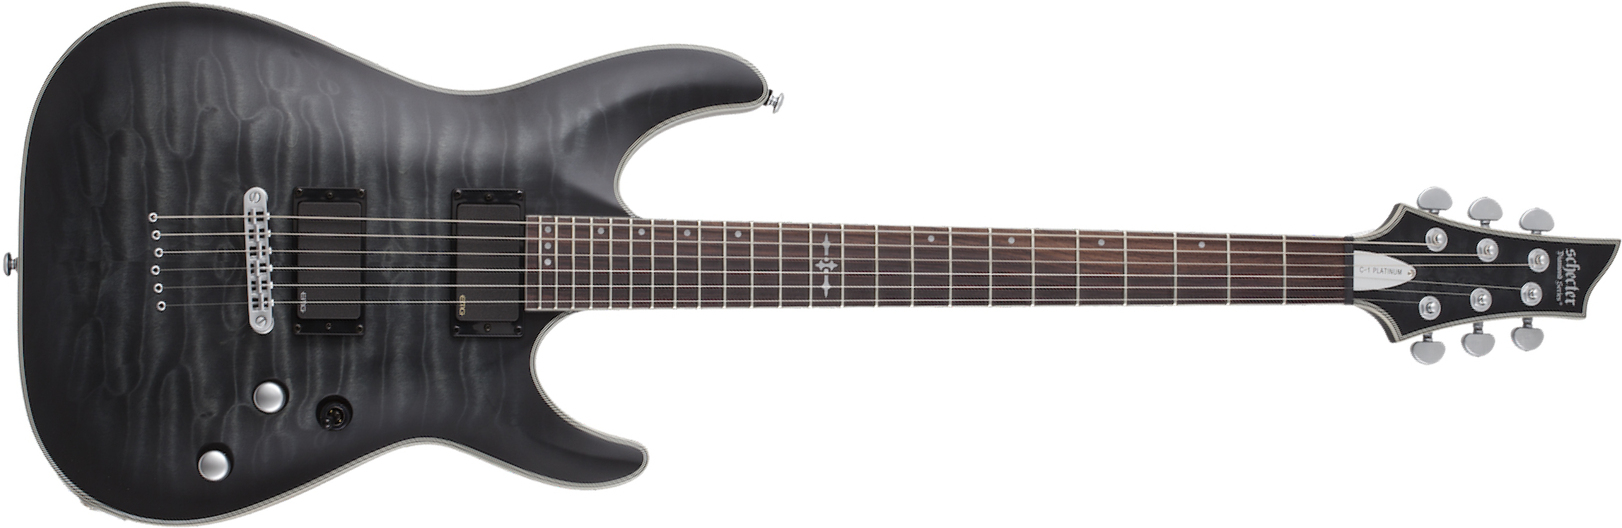 Schecter C-1 Platinum 2h Emg Ht Eb - See Through Black Satin - Str shape electric guitar - Main picture